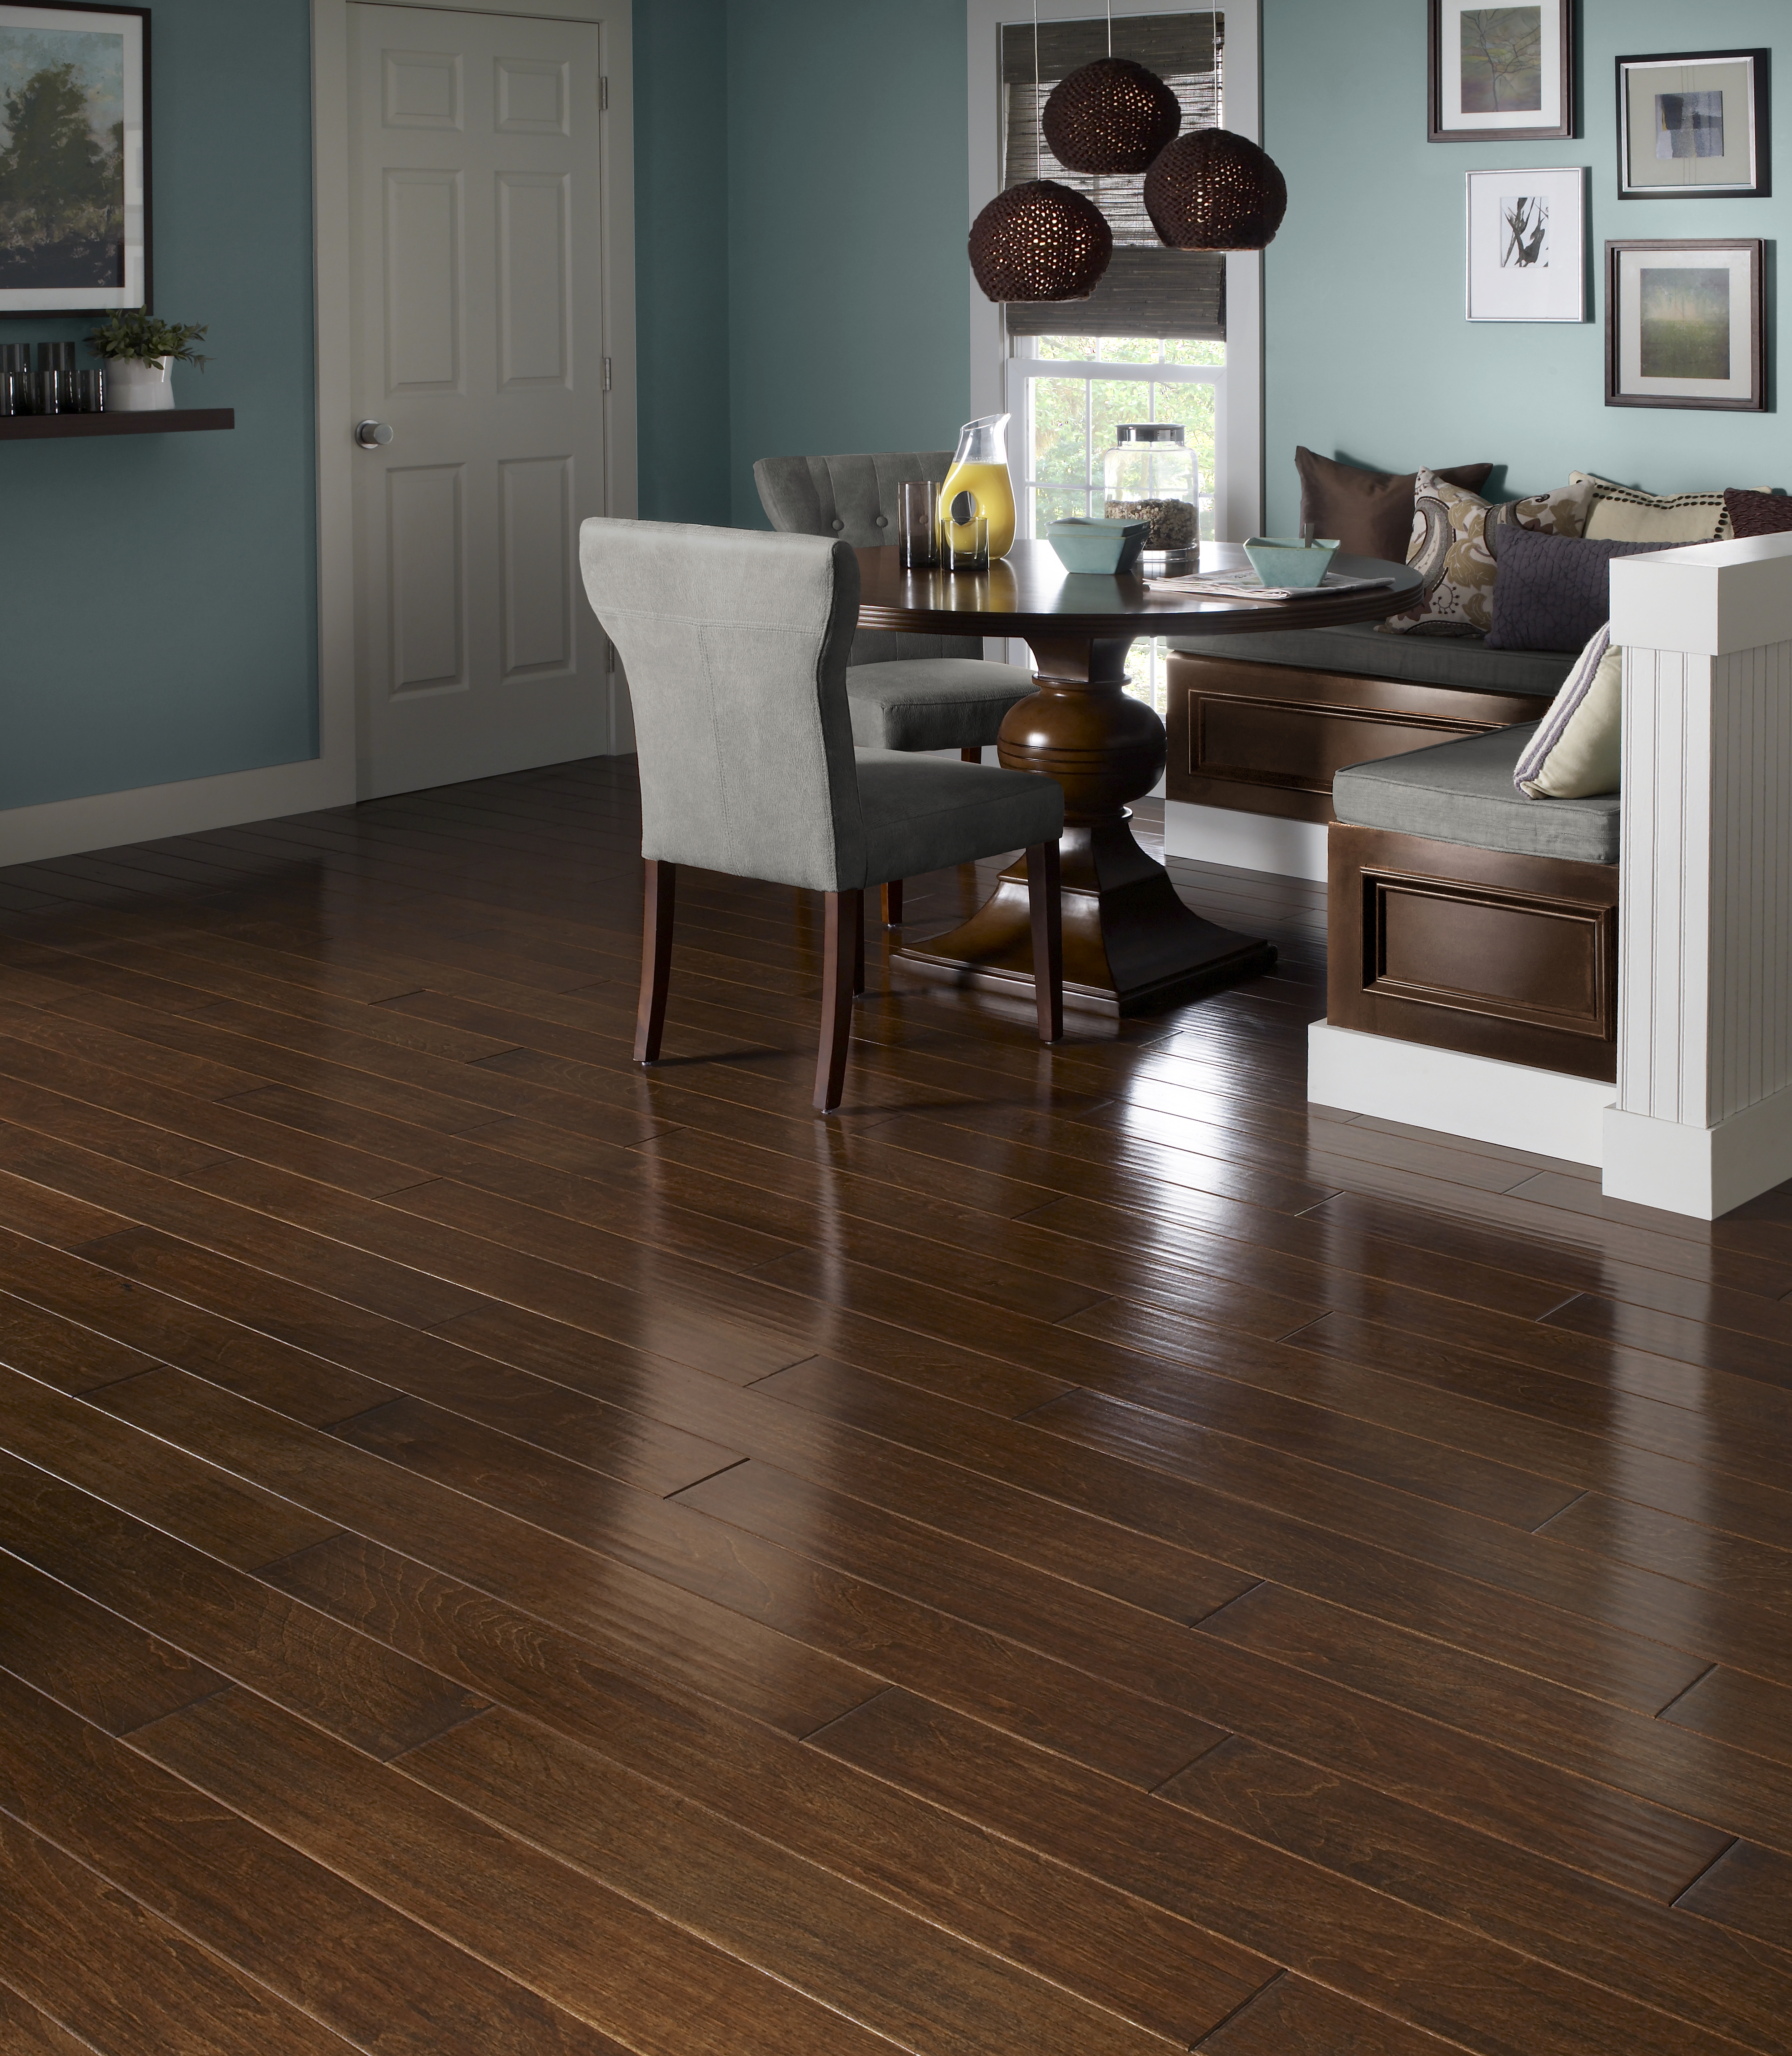 Is Hardwood Flooring Really That High Maintenance? 5